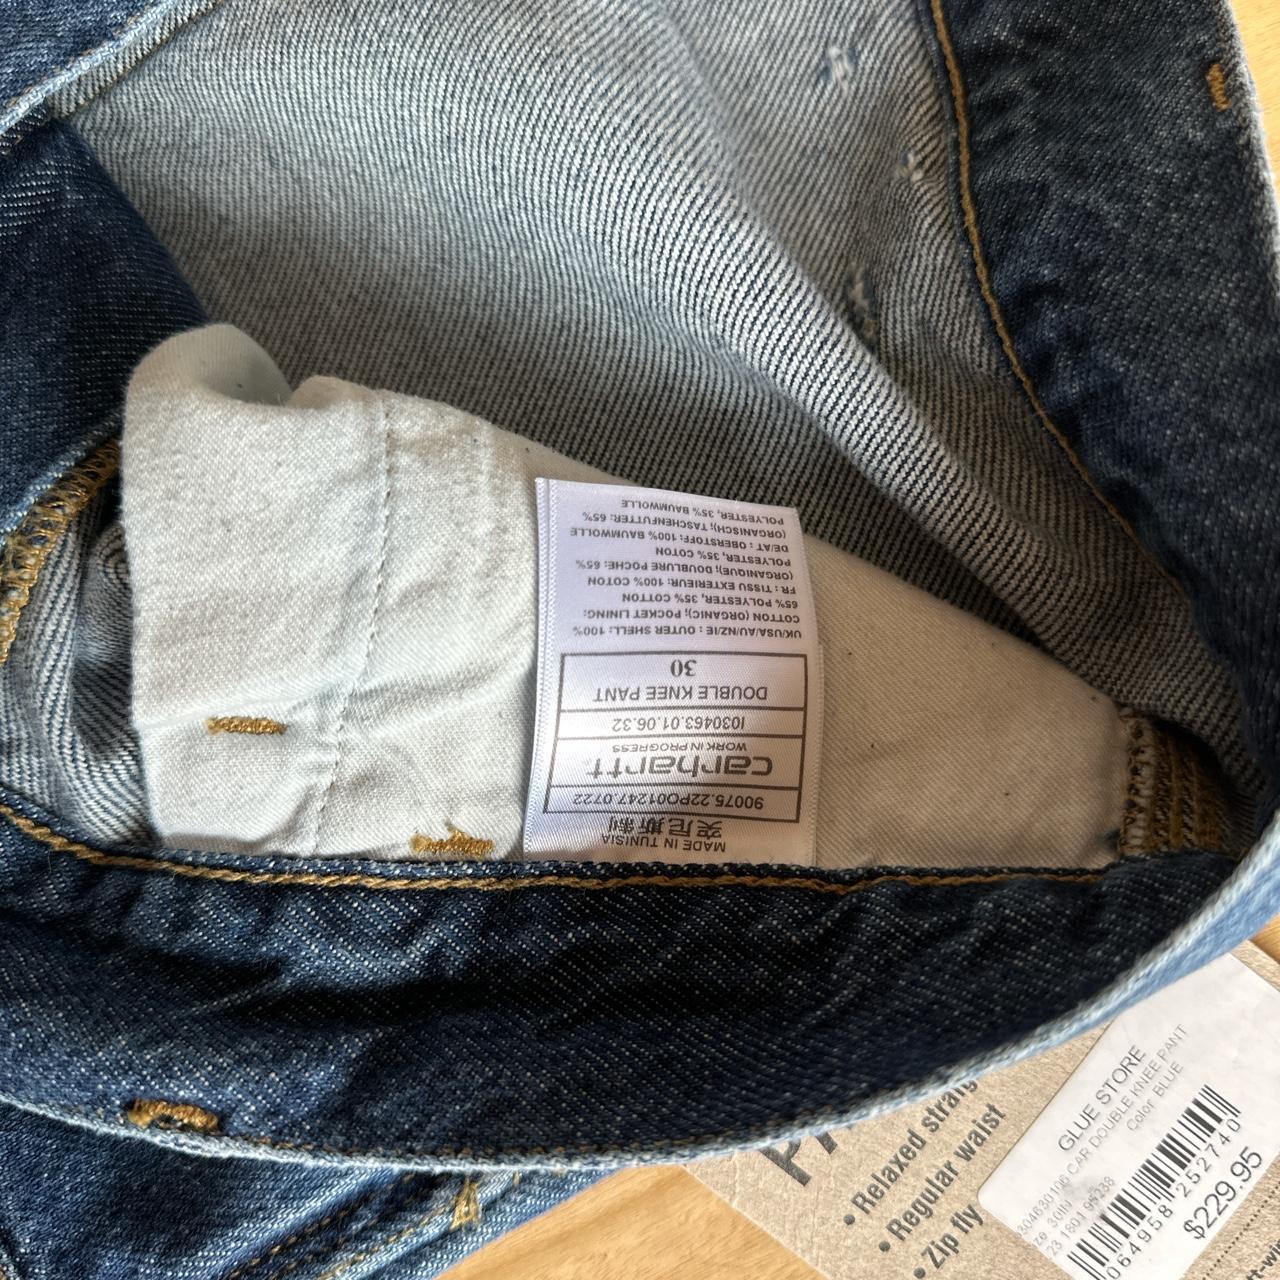 Carhart Jeans - brand new - Depop